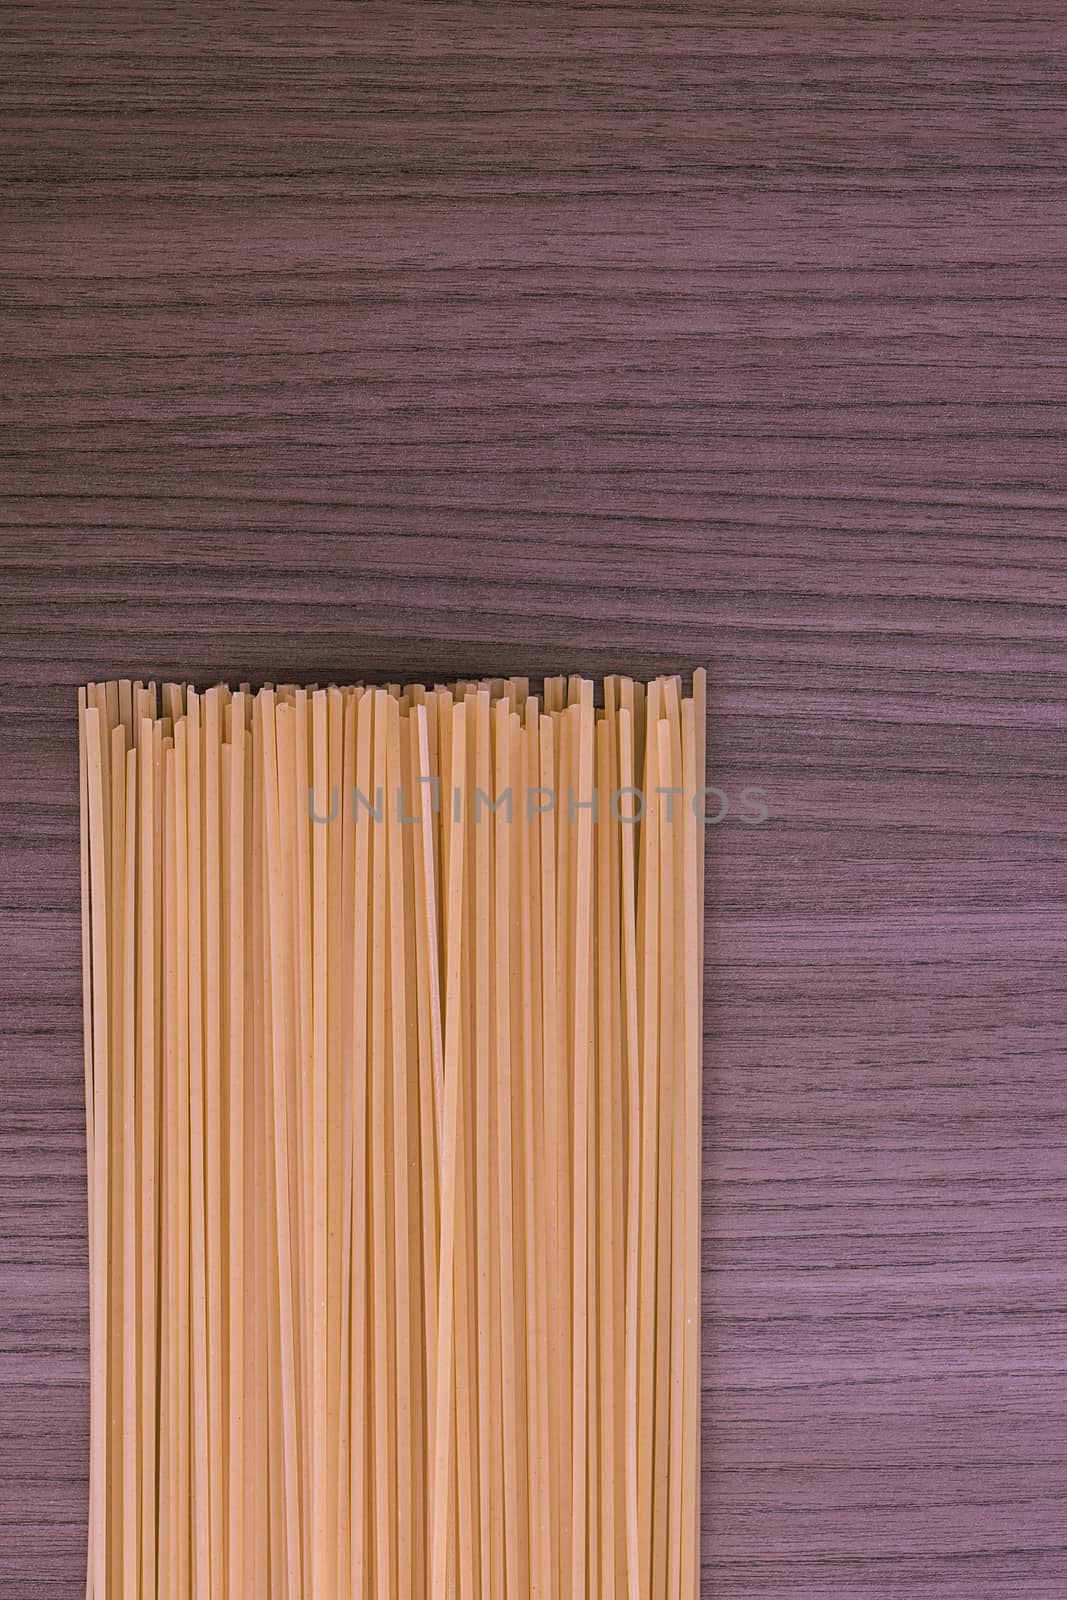 Spaghetti over wood by dalomo84